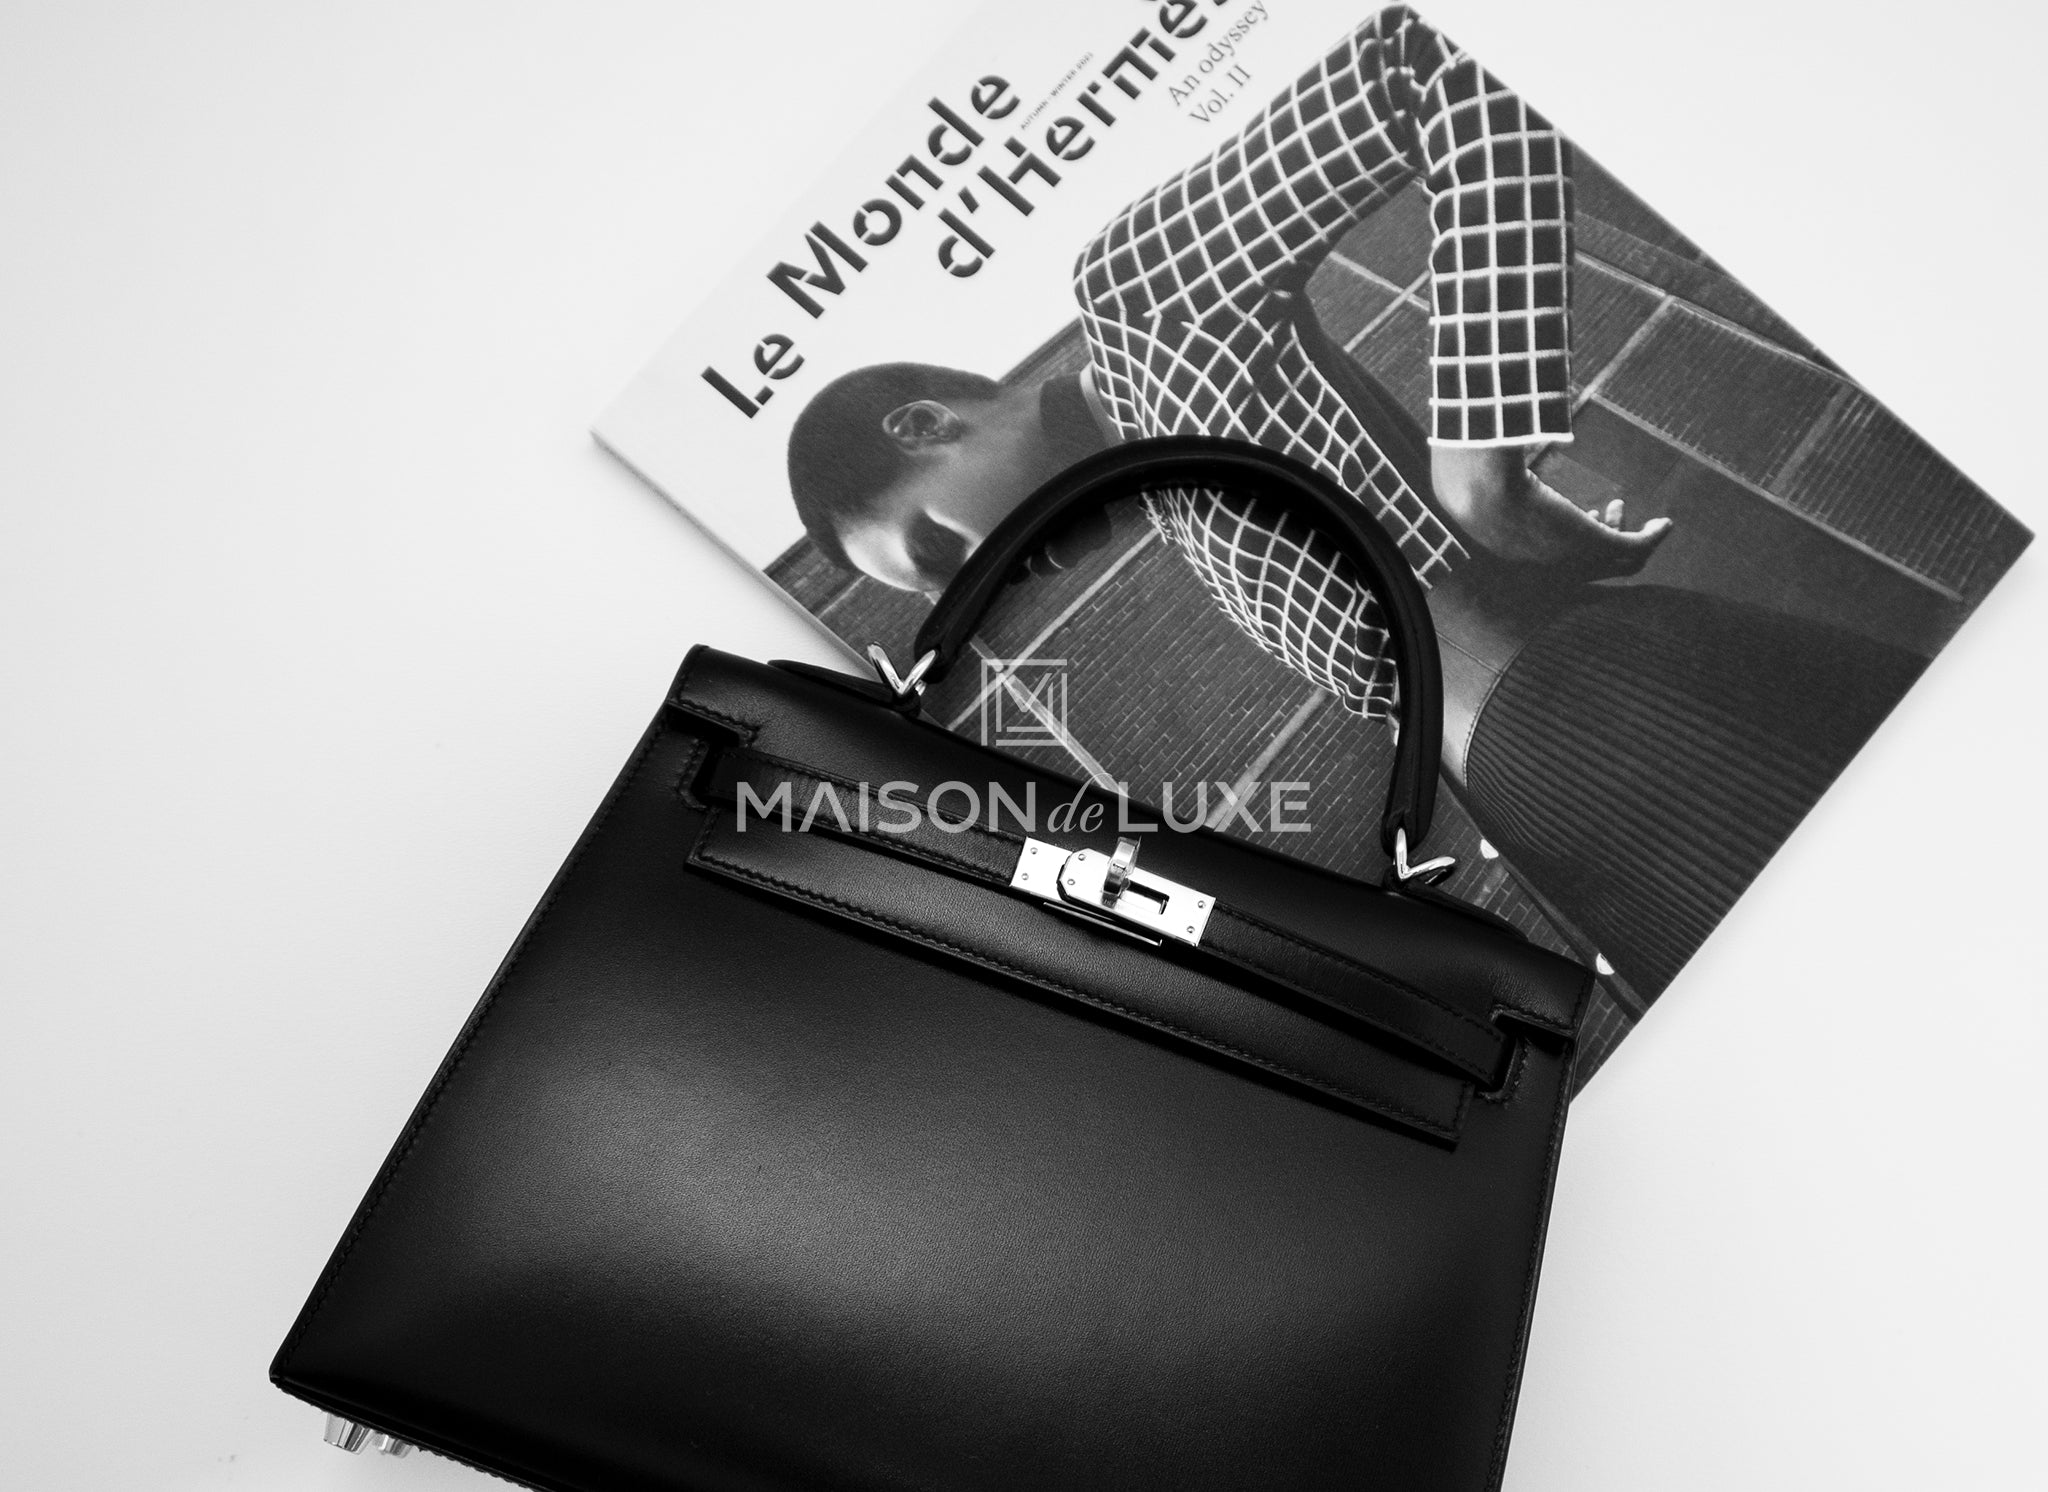 Hermes Kelly Sellier 28 Bag Black Box Leather Palladium Hardware